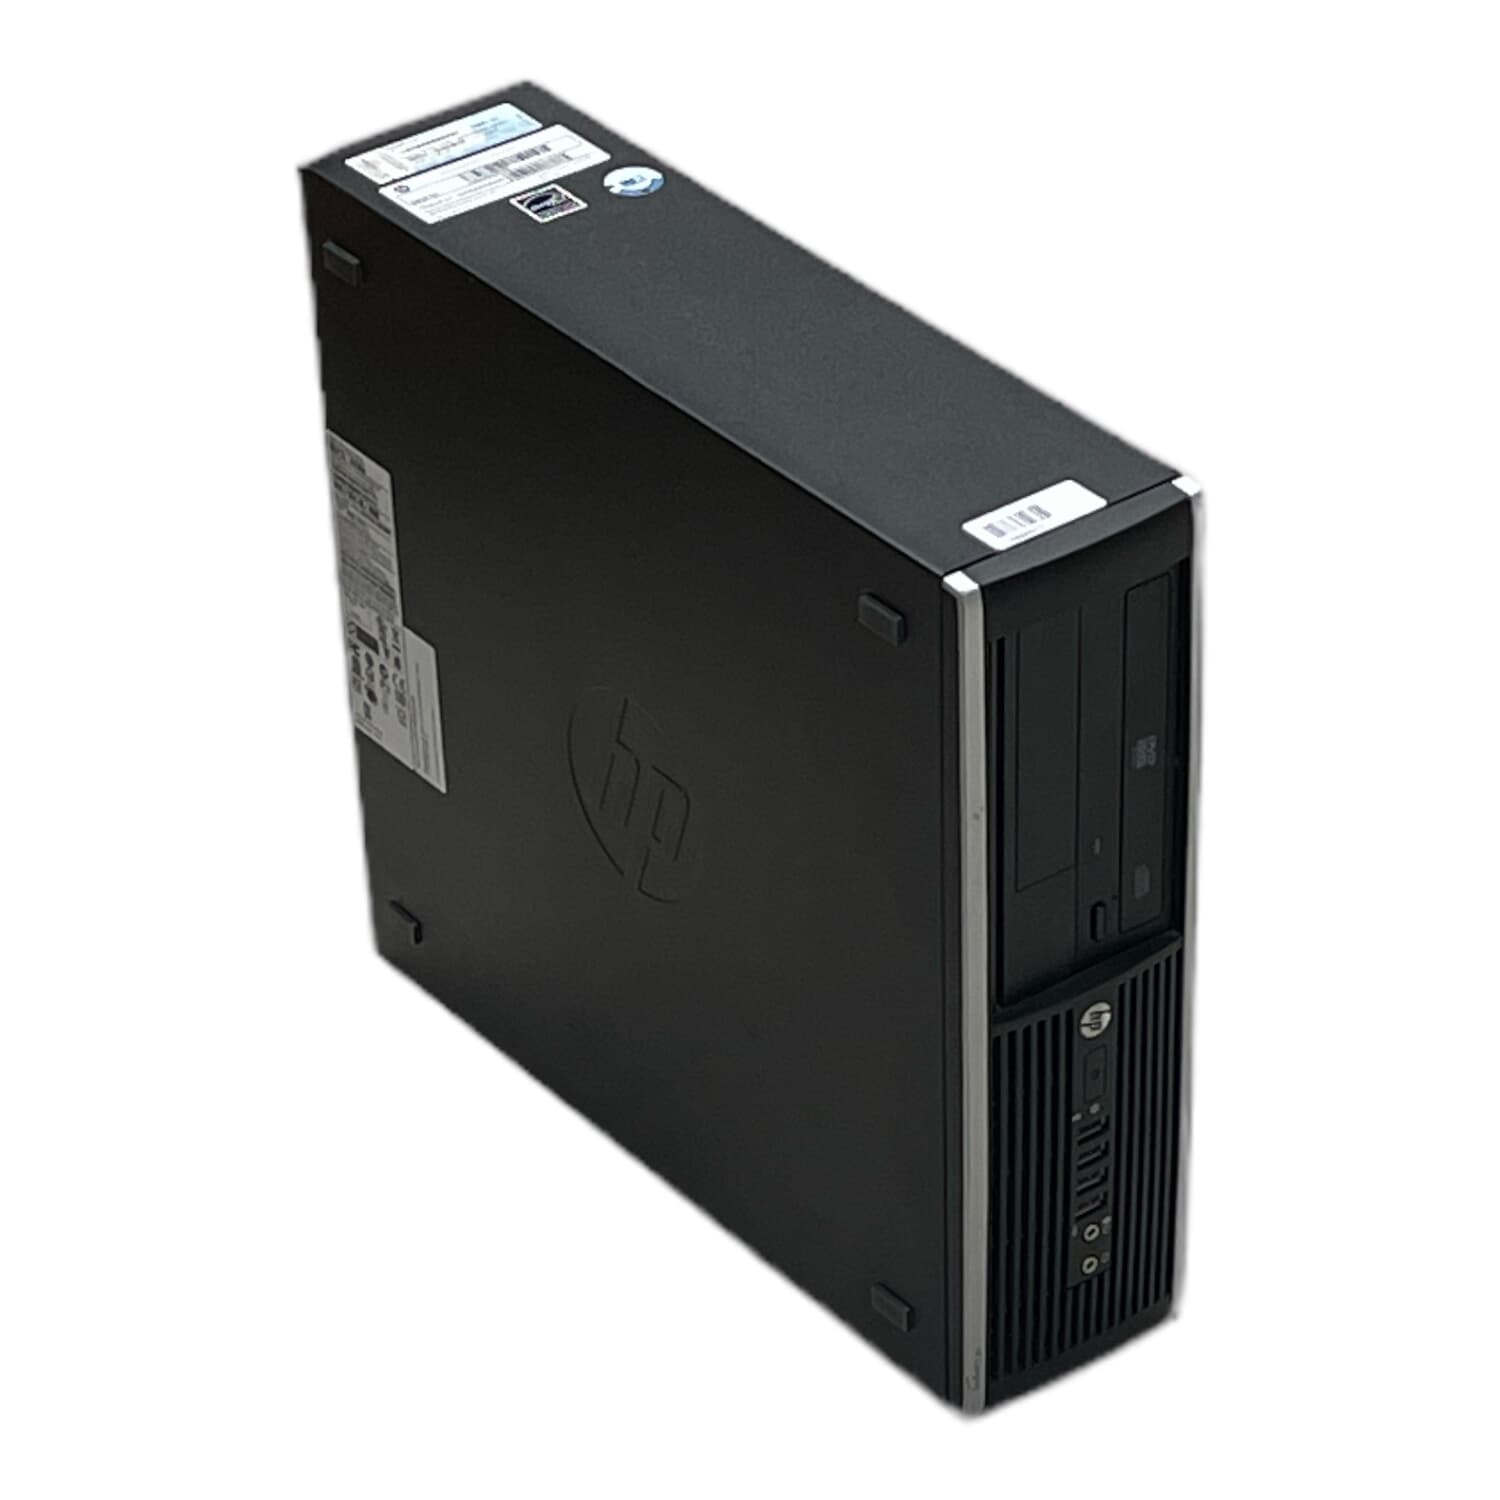 HP compaq 6200 Pro SFF core i5 メモリ10GB 3月17日(火)まで 